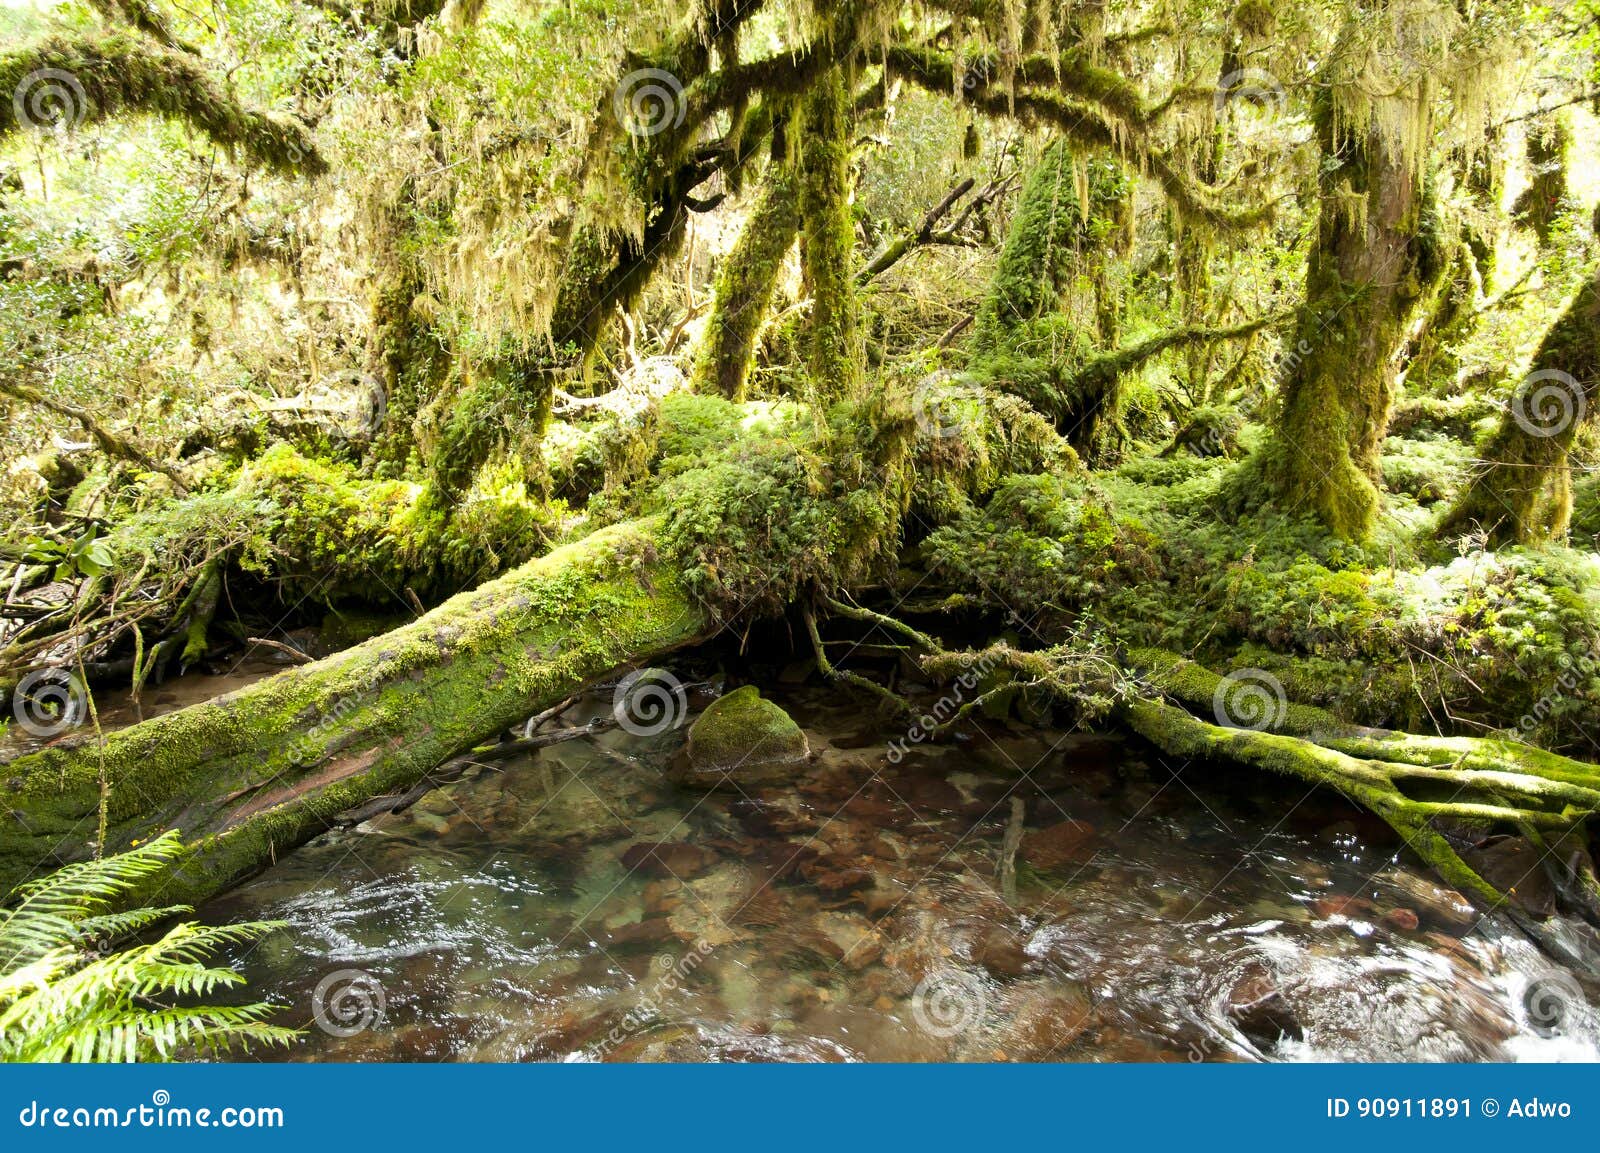 enchanted forest - queulat national park - chile